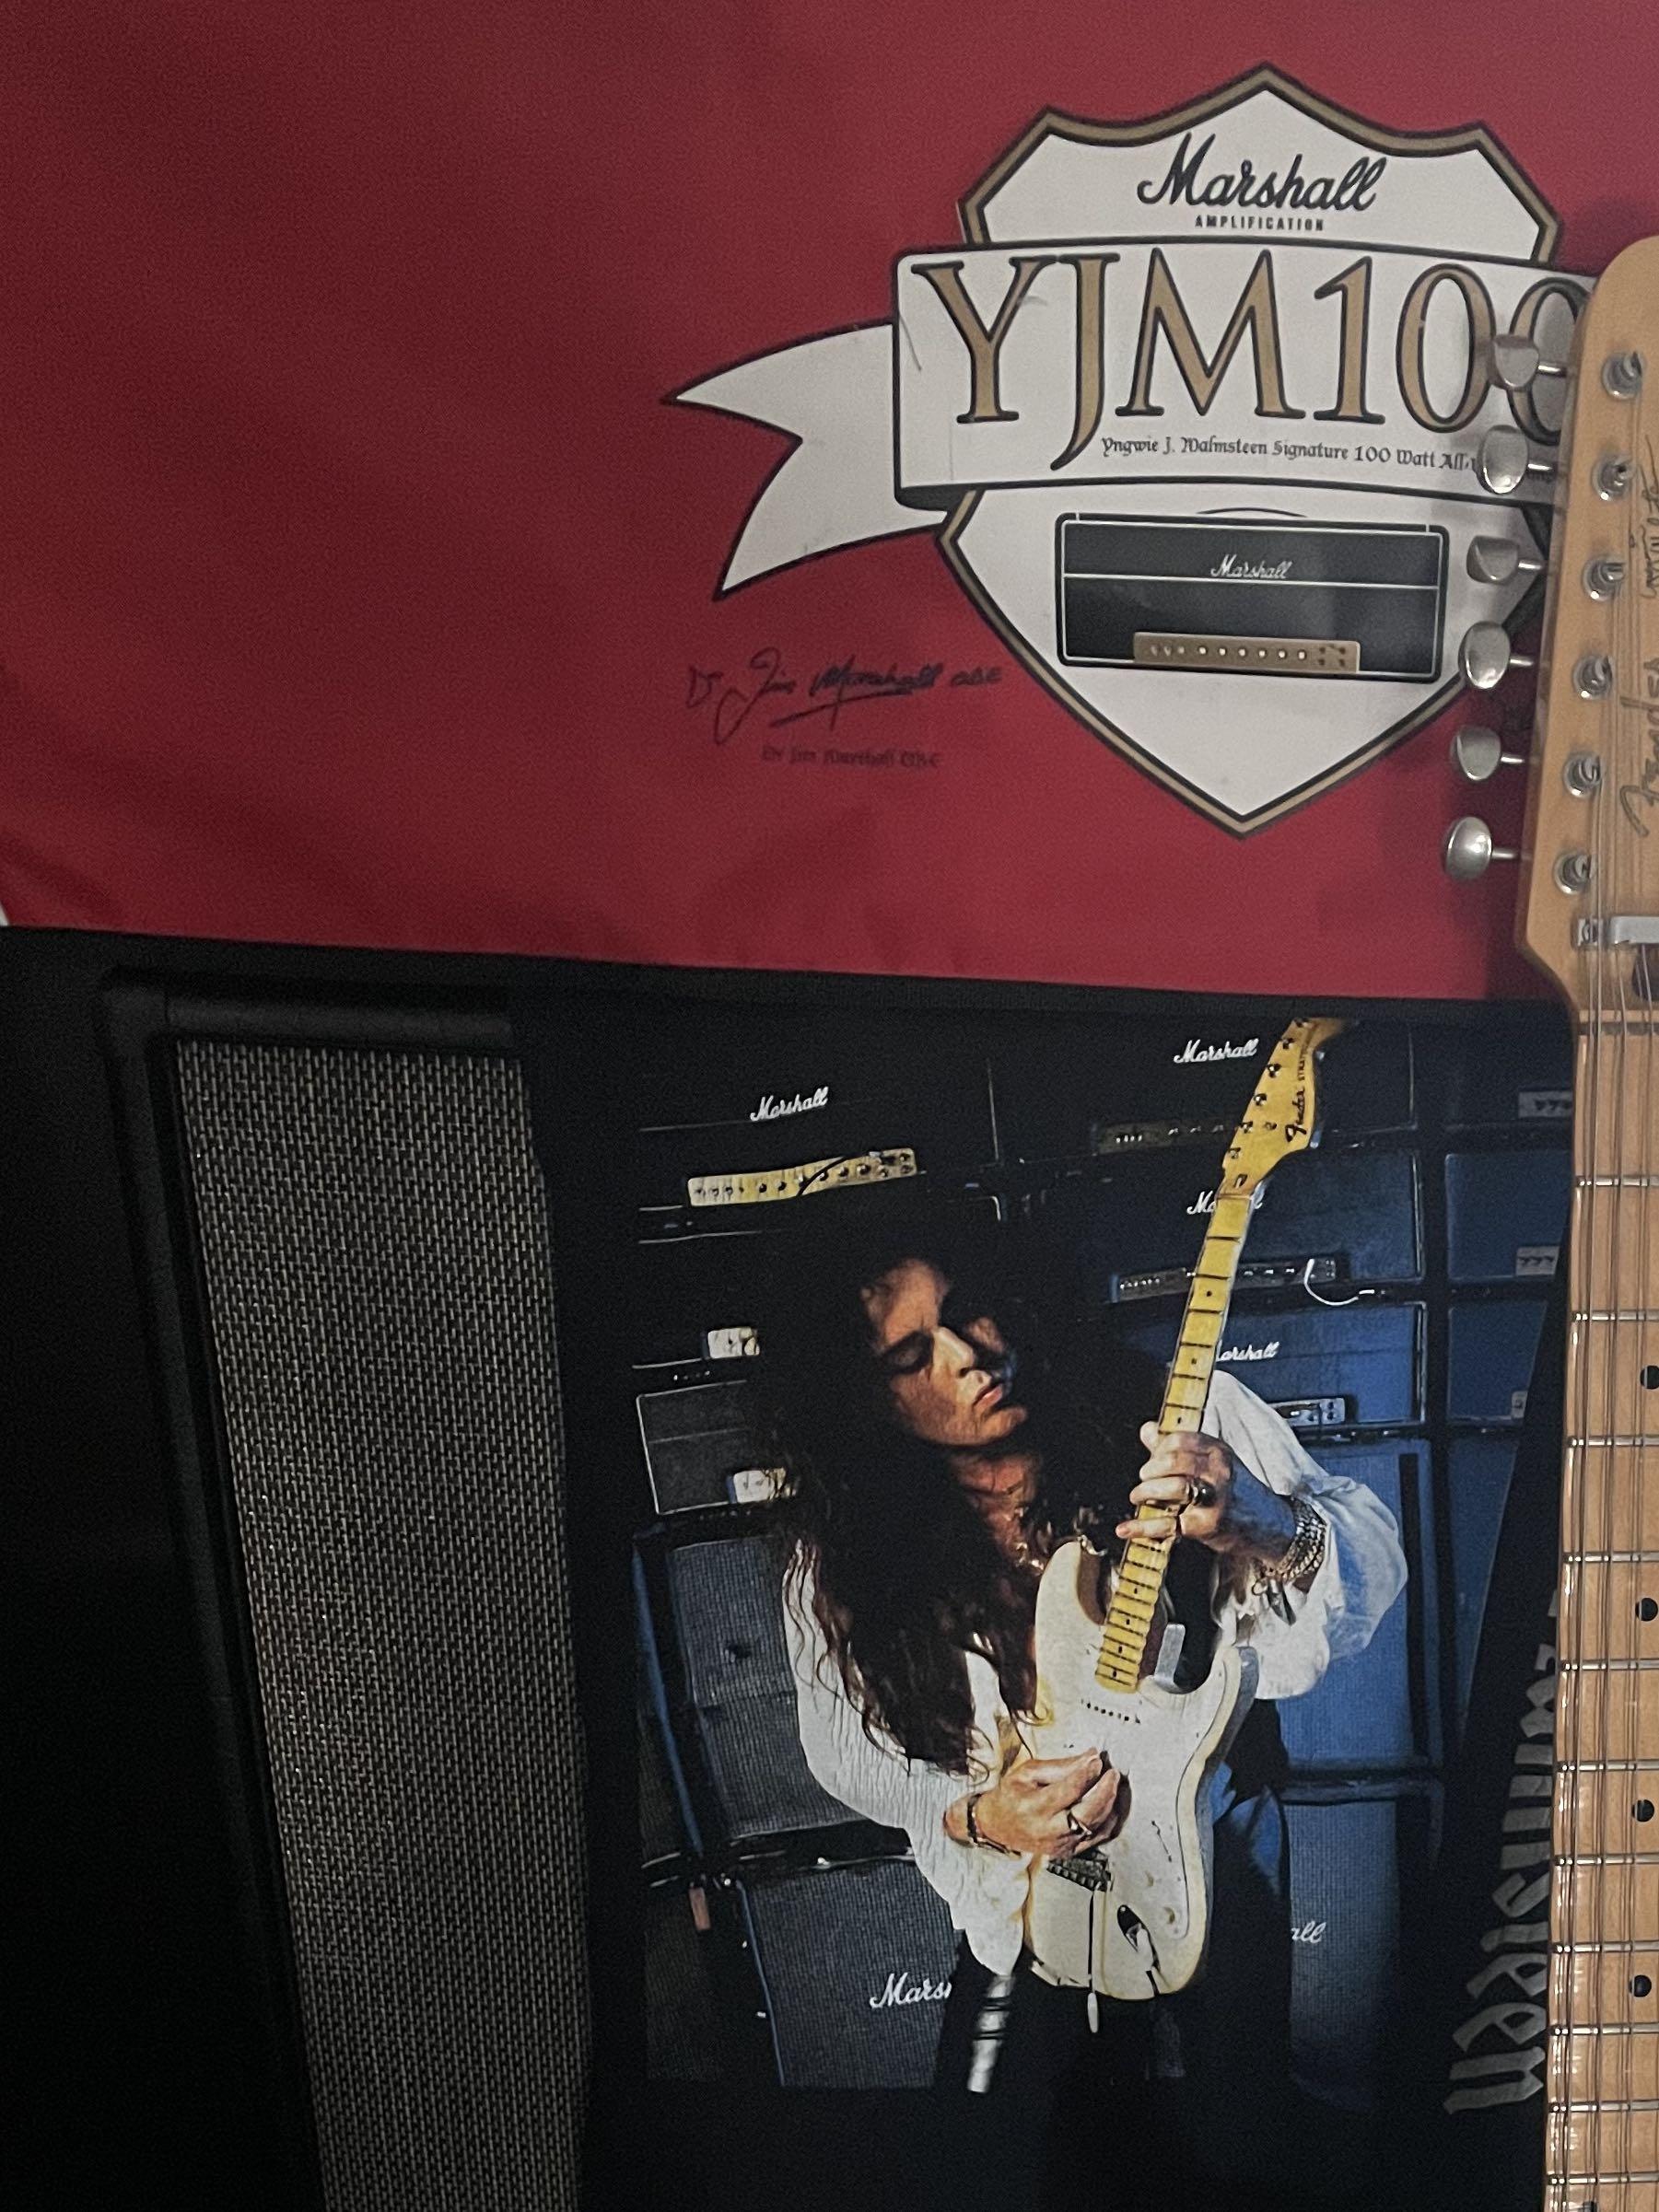 Marshall YJM 100 Yngwie Malmsteen guitar tube amplifier